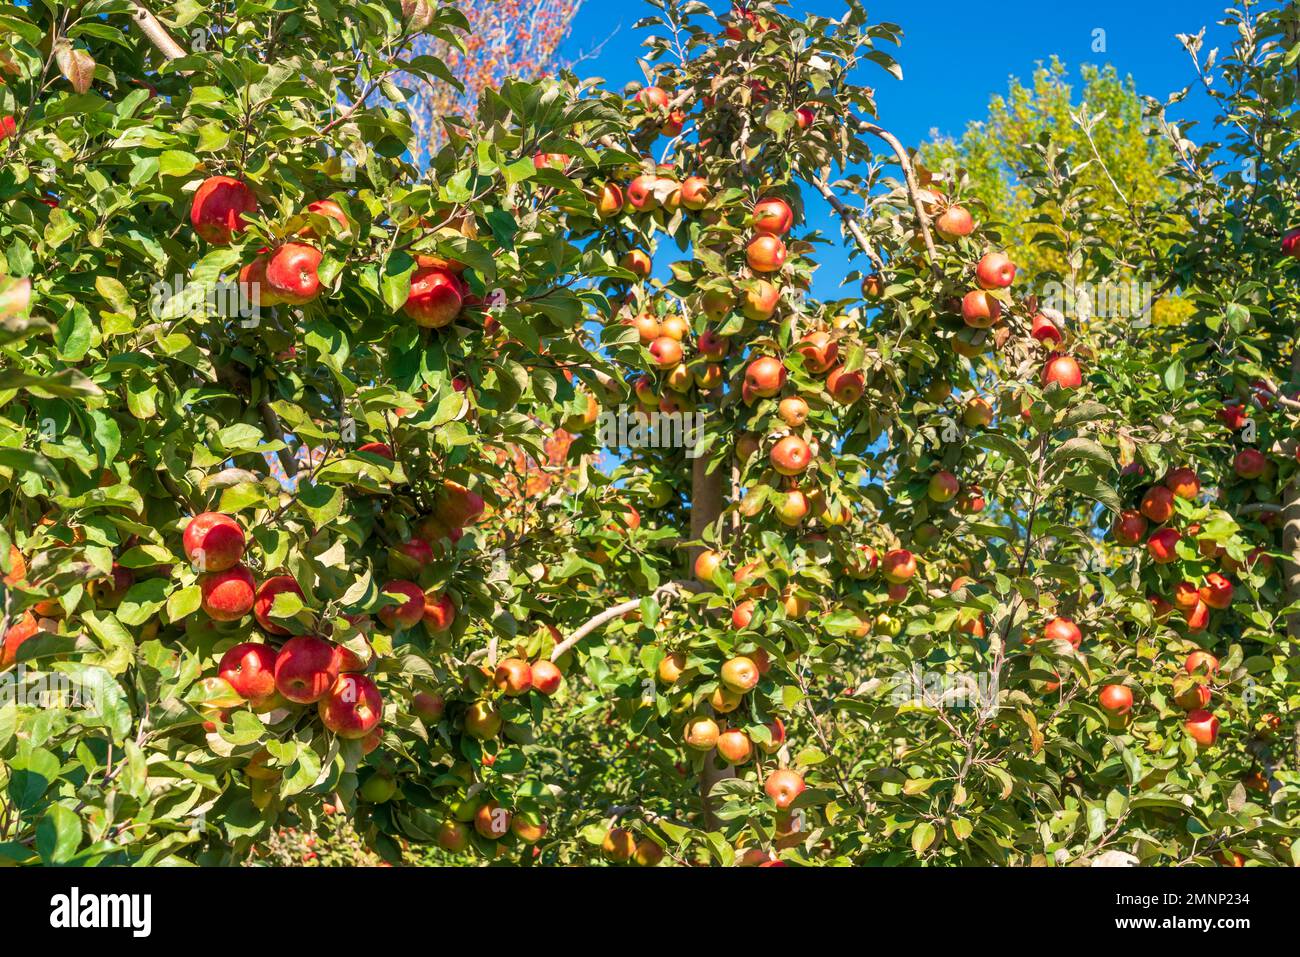 https://c8.alamy.com/comp/2MNP234/honeycrisp-apples-in-the-wolfville-apple-orchards-wolfville-nova-scotia-canada-2MNP234.jpg